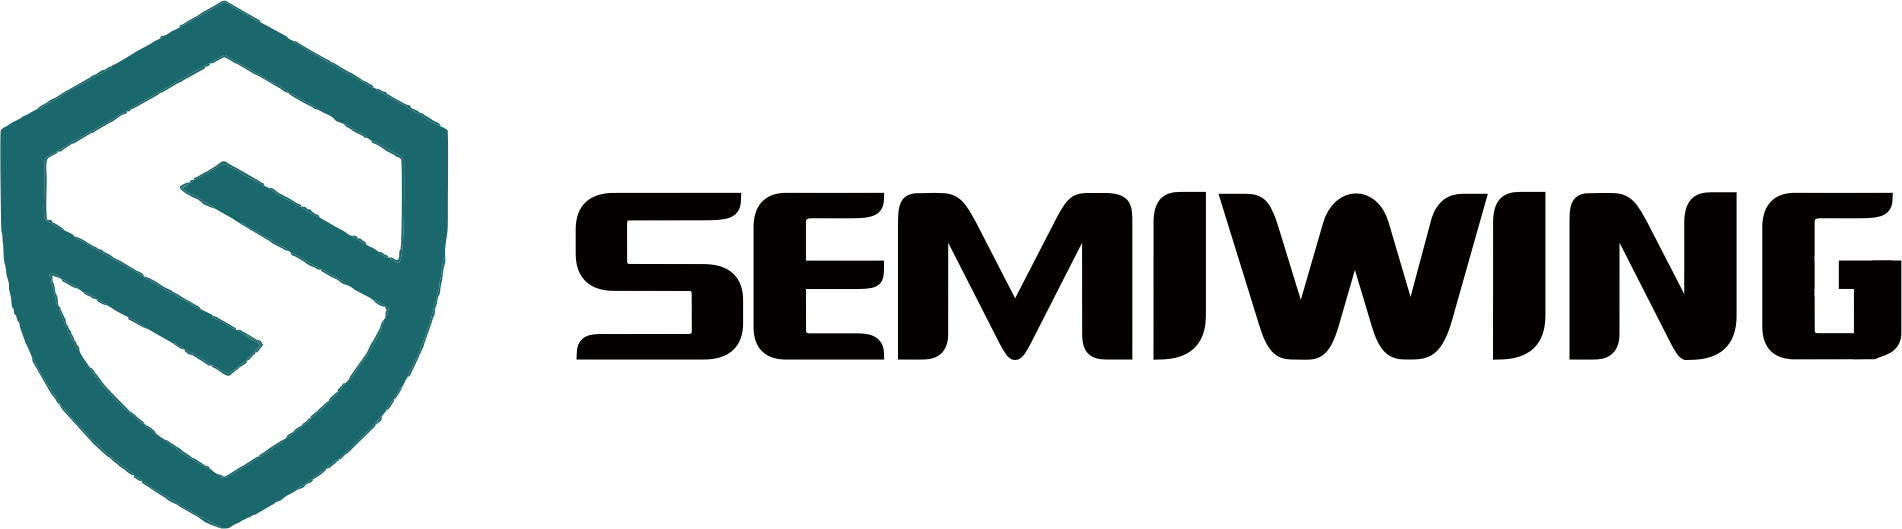 Semiwing-高品质电路保护器件制造商